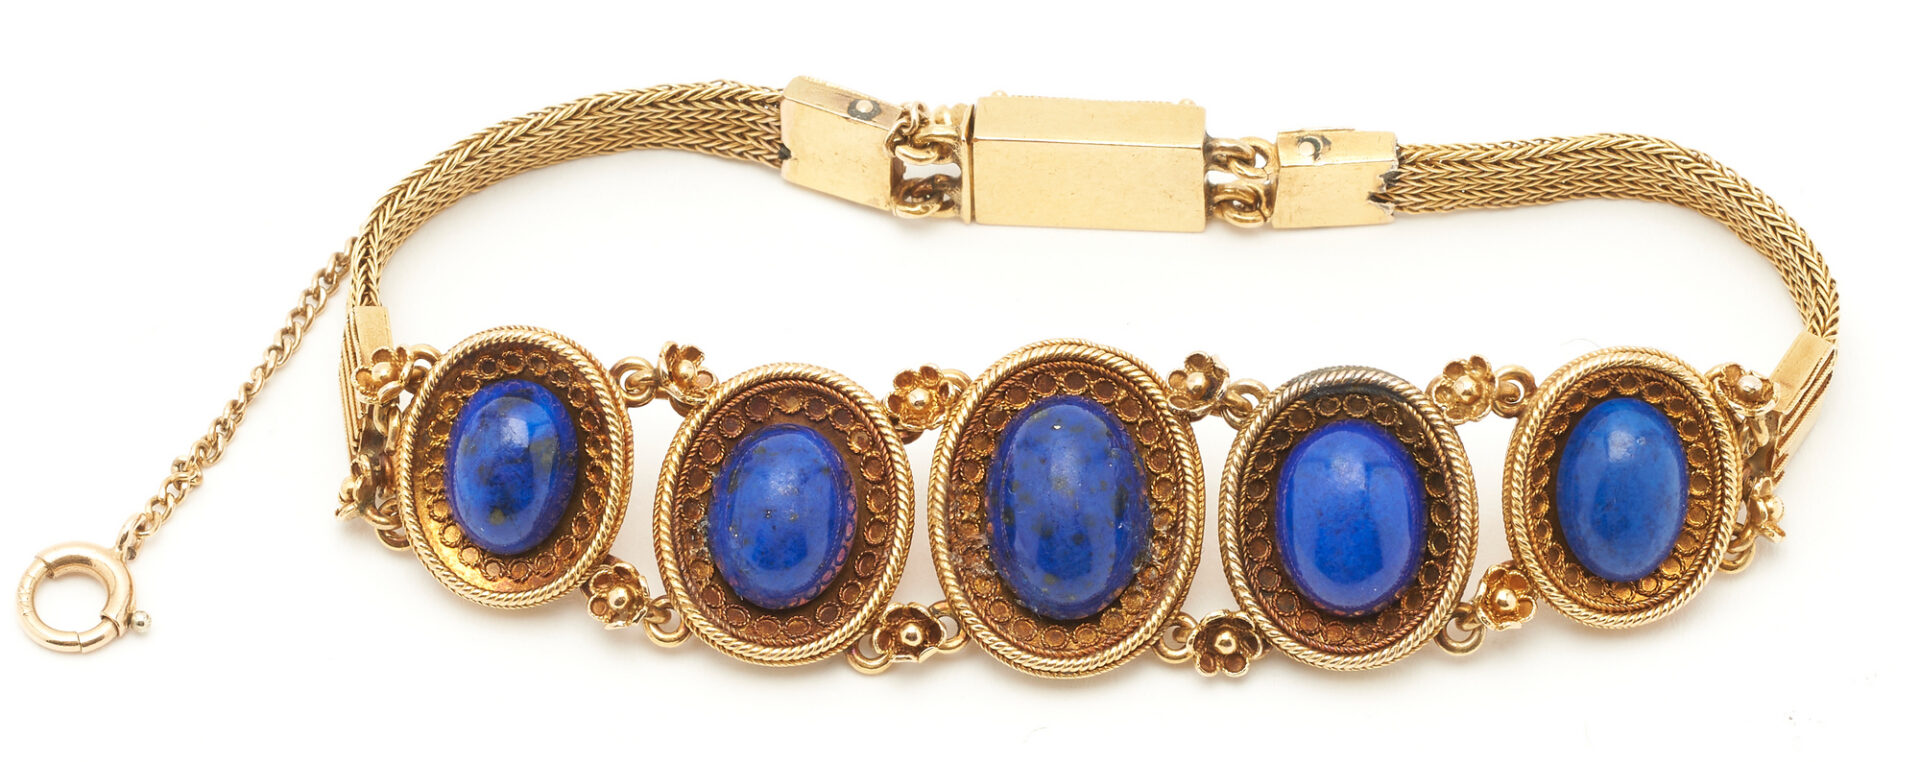 Lot 52: Two 22K Gold & Lapis Victorian Etruscan Pieces, Bracelet and Pendant, attrib. Castellani